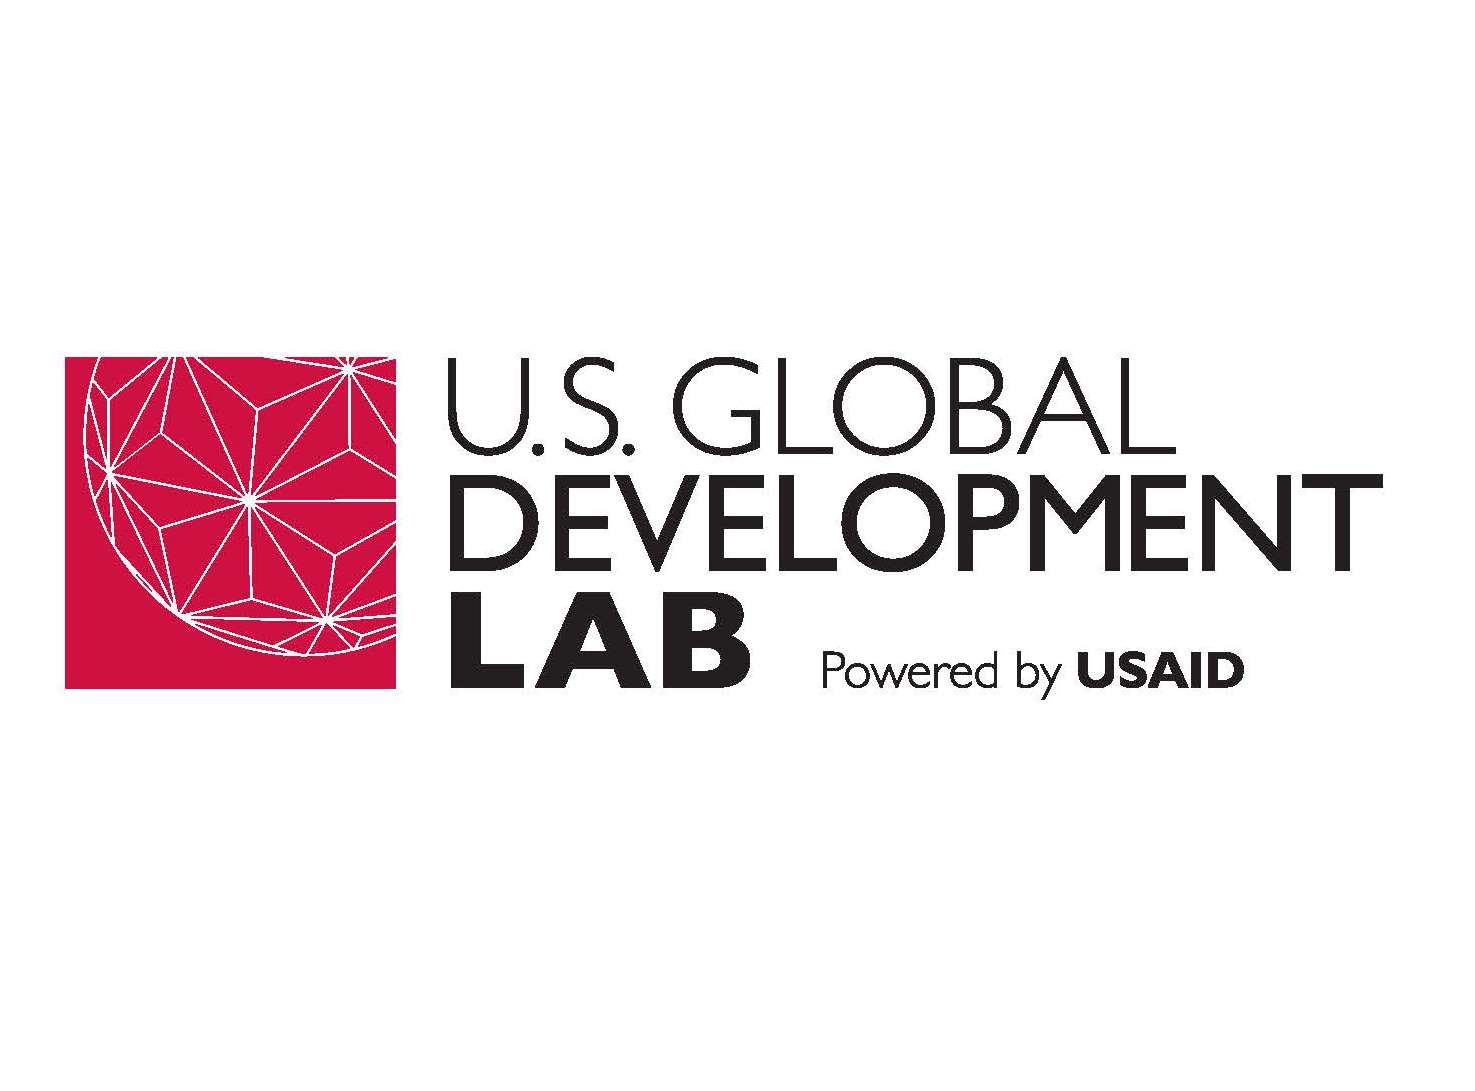 USAID’s U.S. Global Development Lab